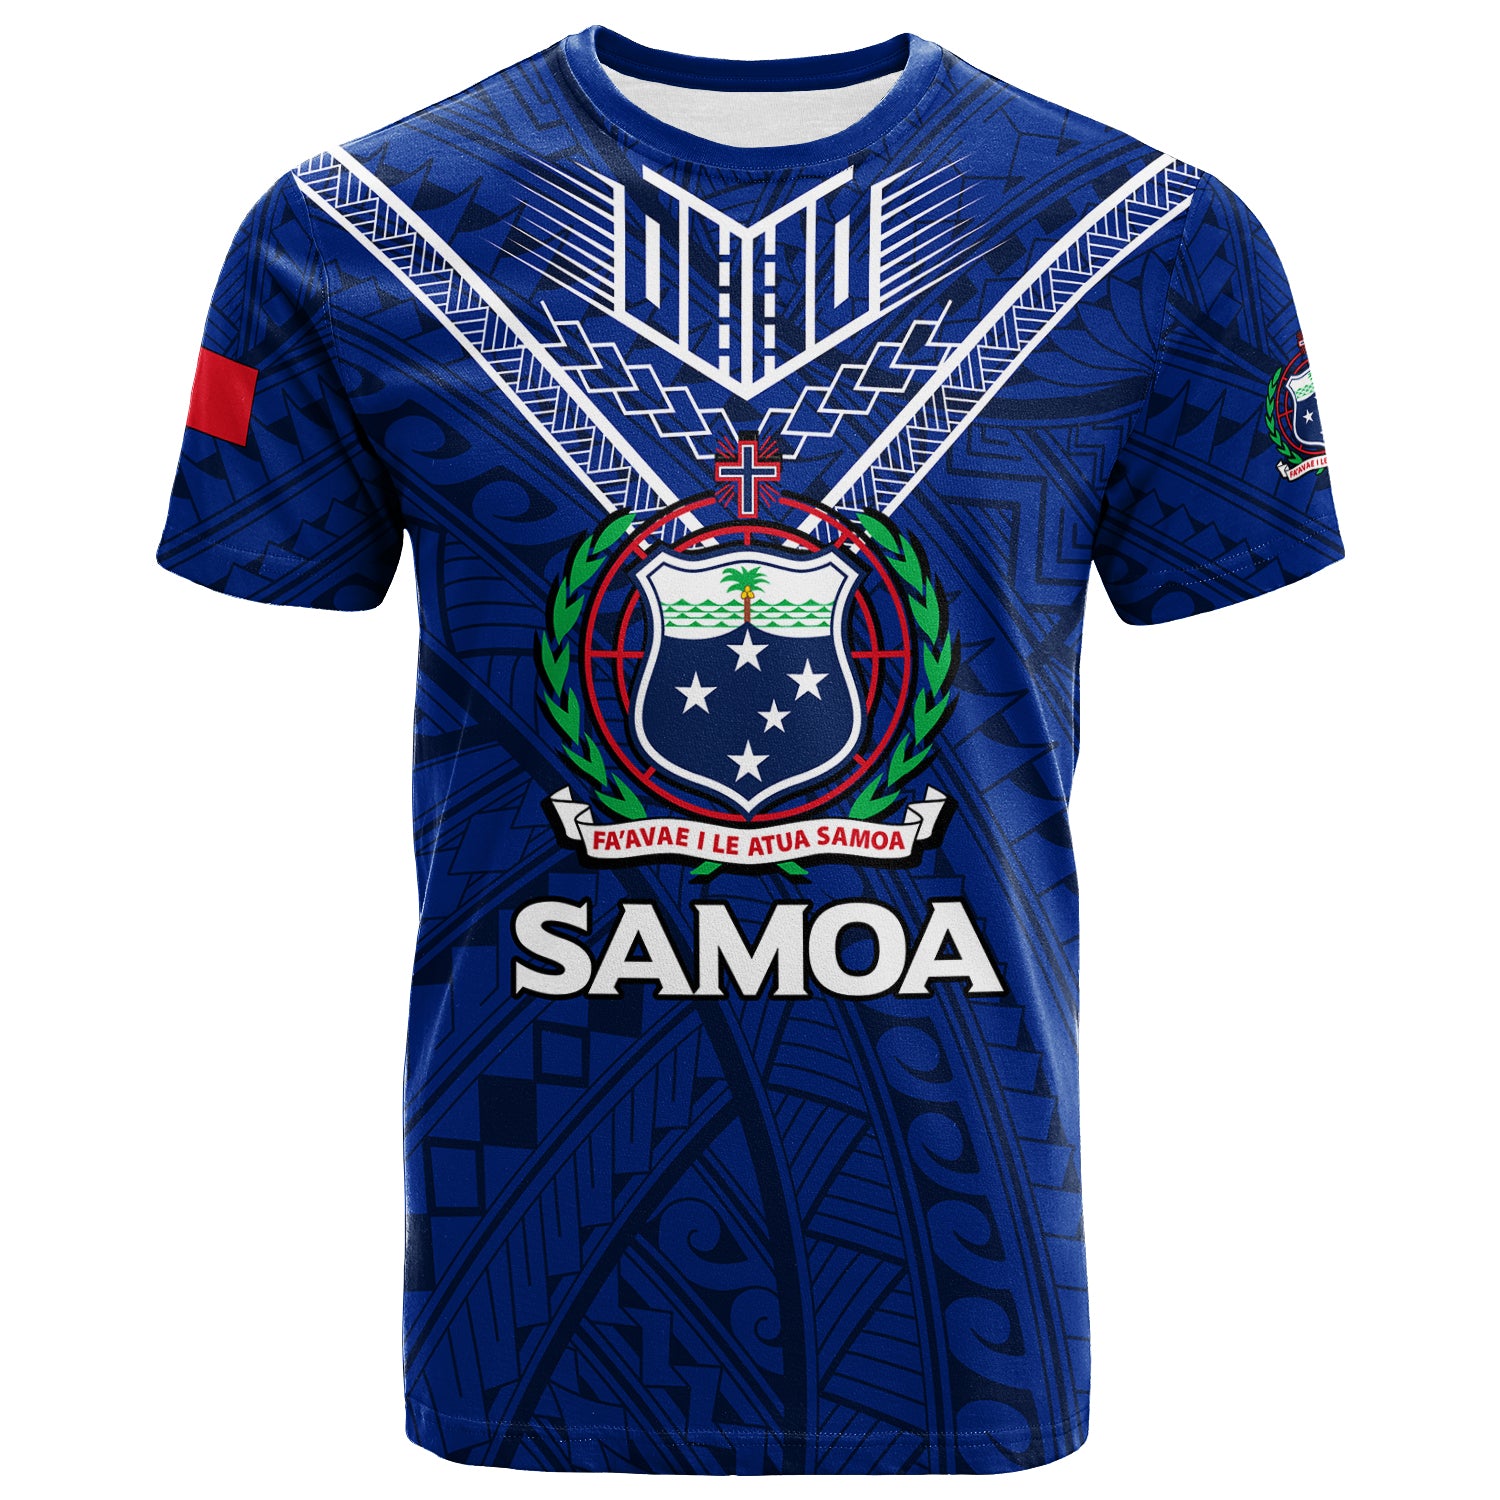 Samoa T Shirt Samoan Warrior Pride LT12 Unisex Blue - Polynesian Pride